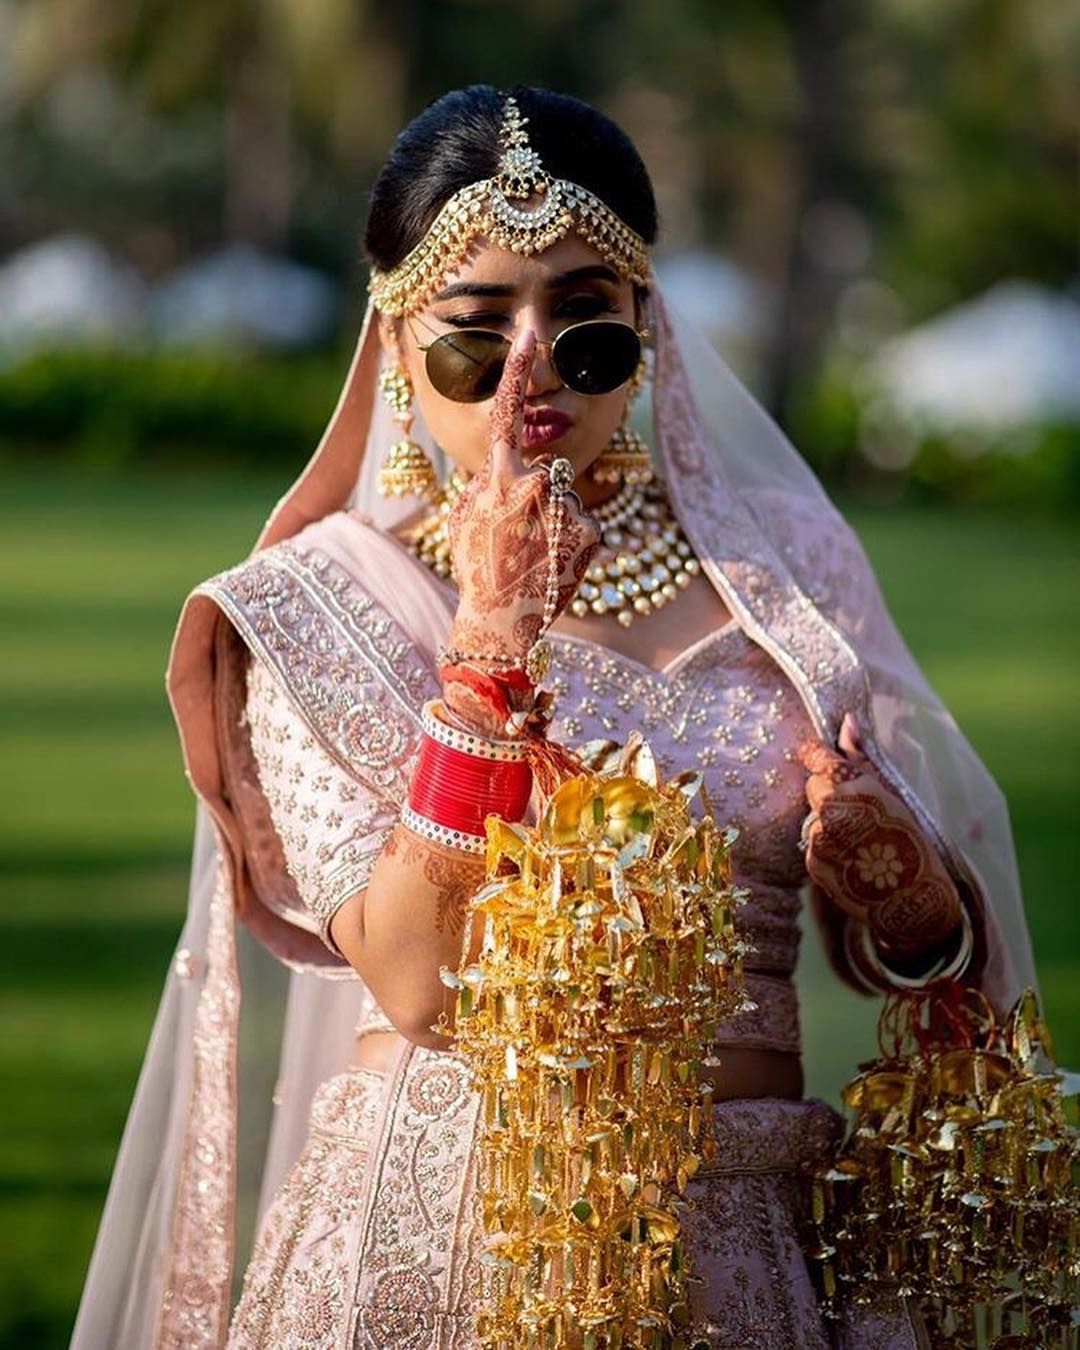 Marathi Wedding Photography In Bangalore | Get Free Quote